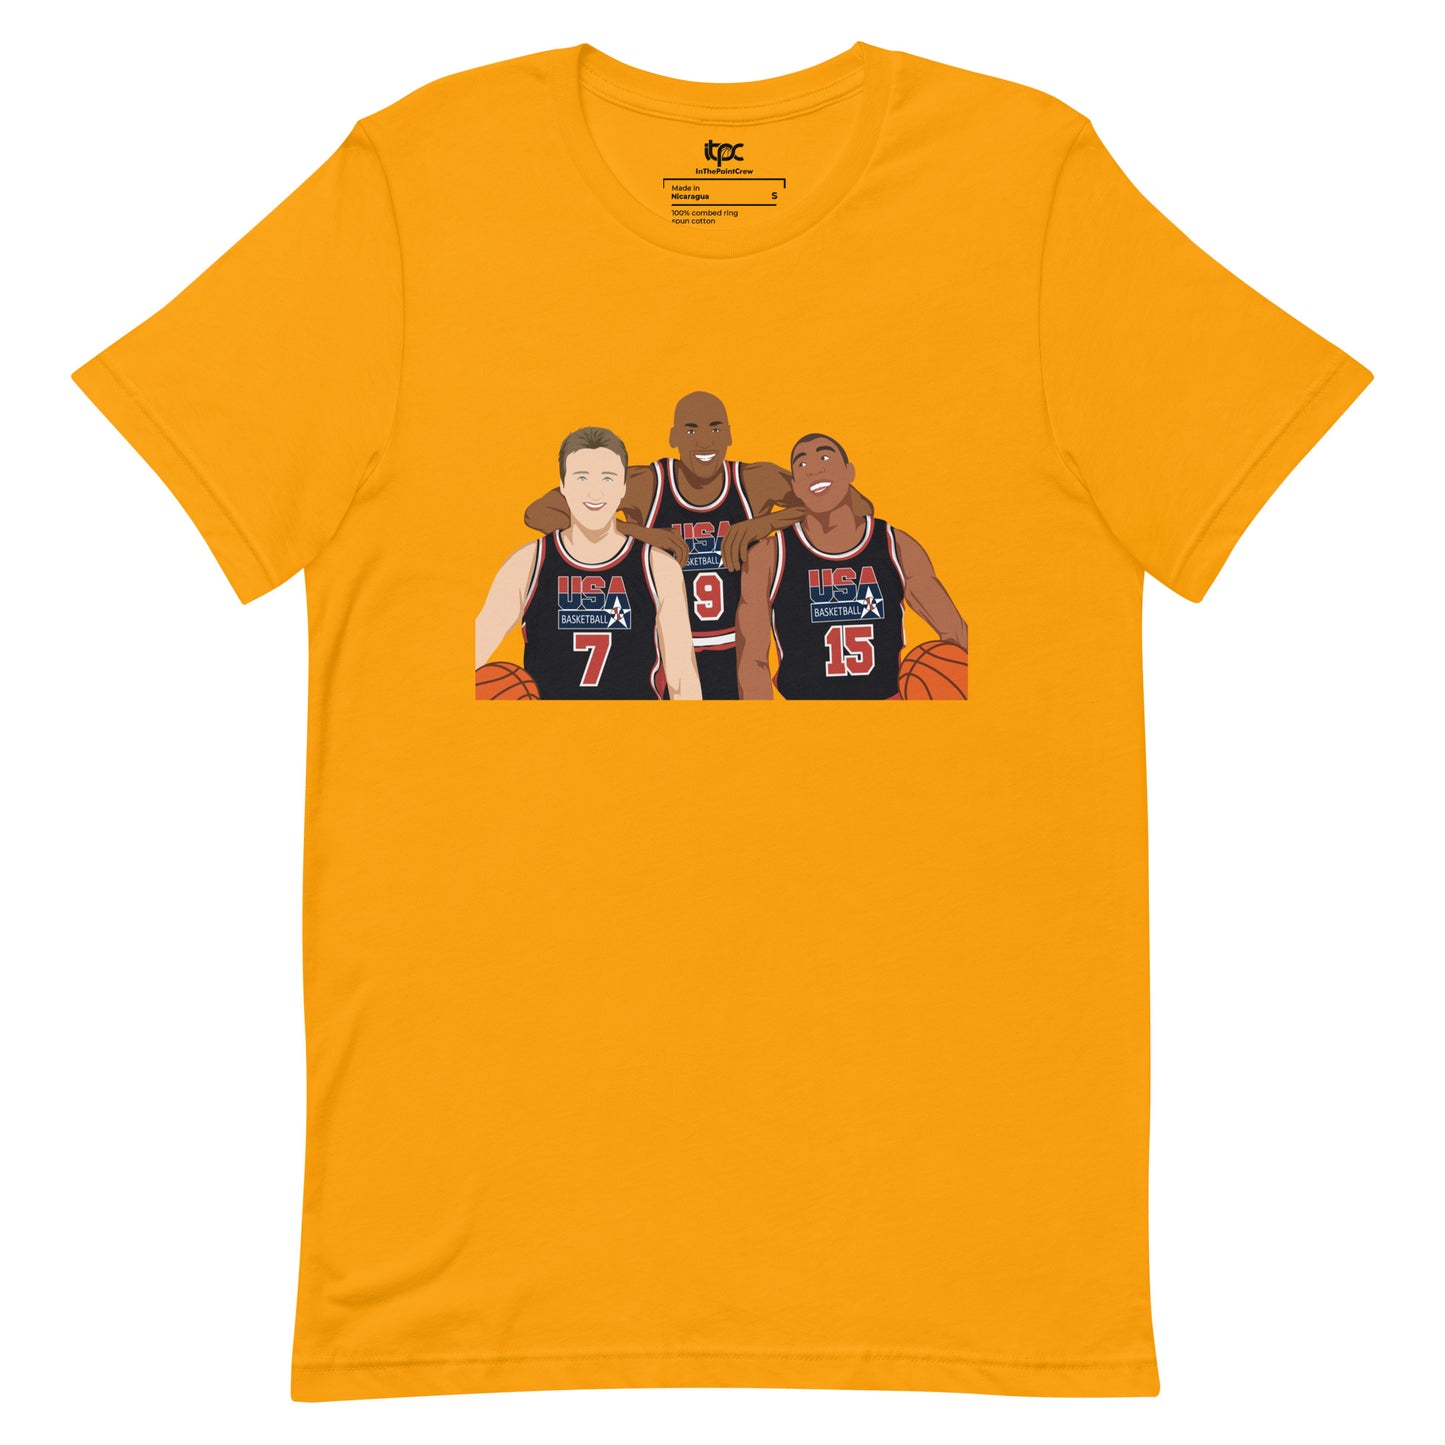 Dream Team - "Big 3" t-shirt